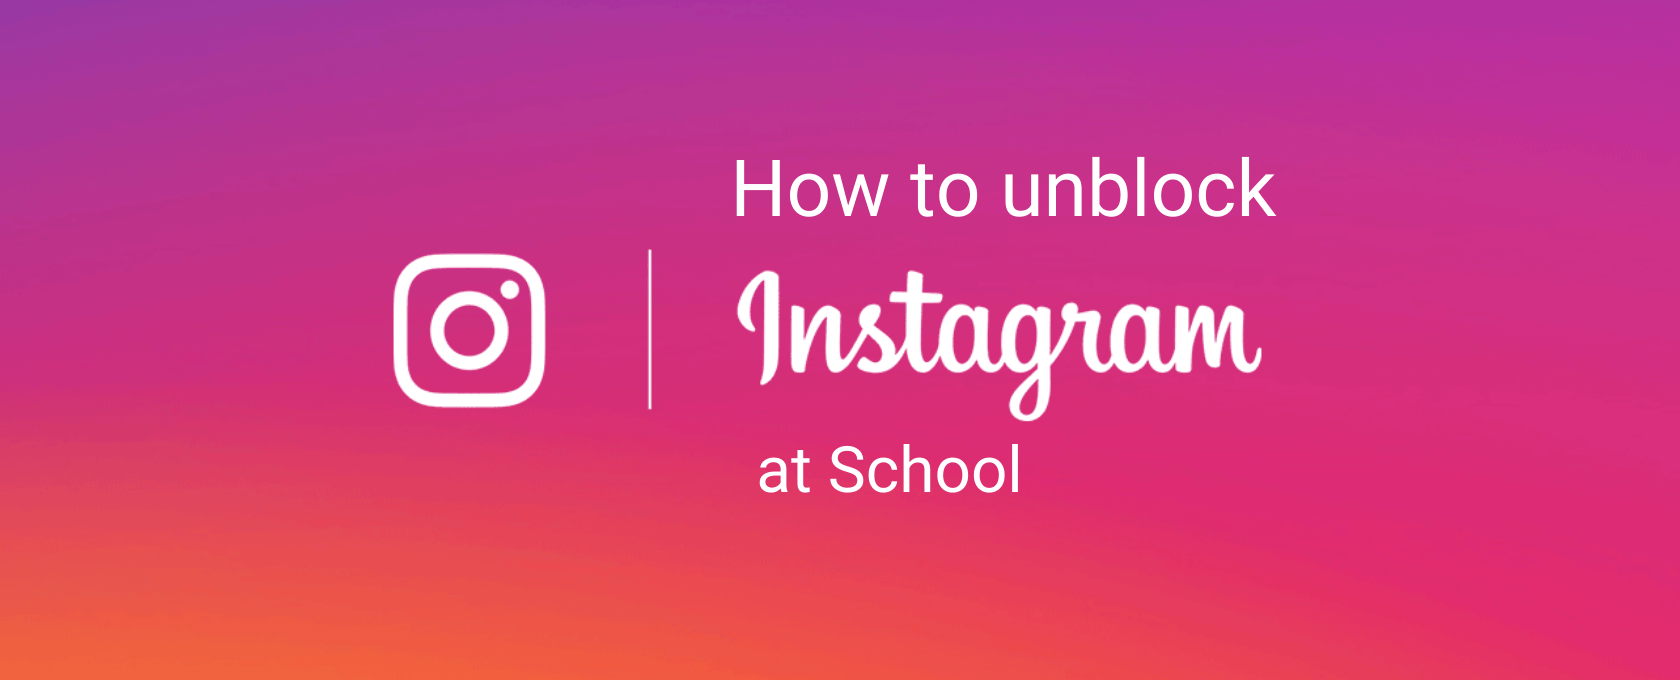 How to Unblock Instagram at School?